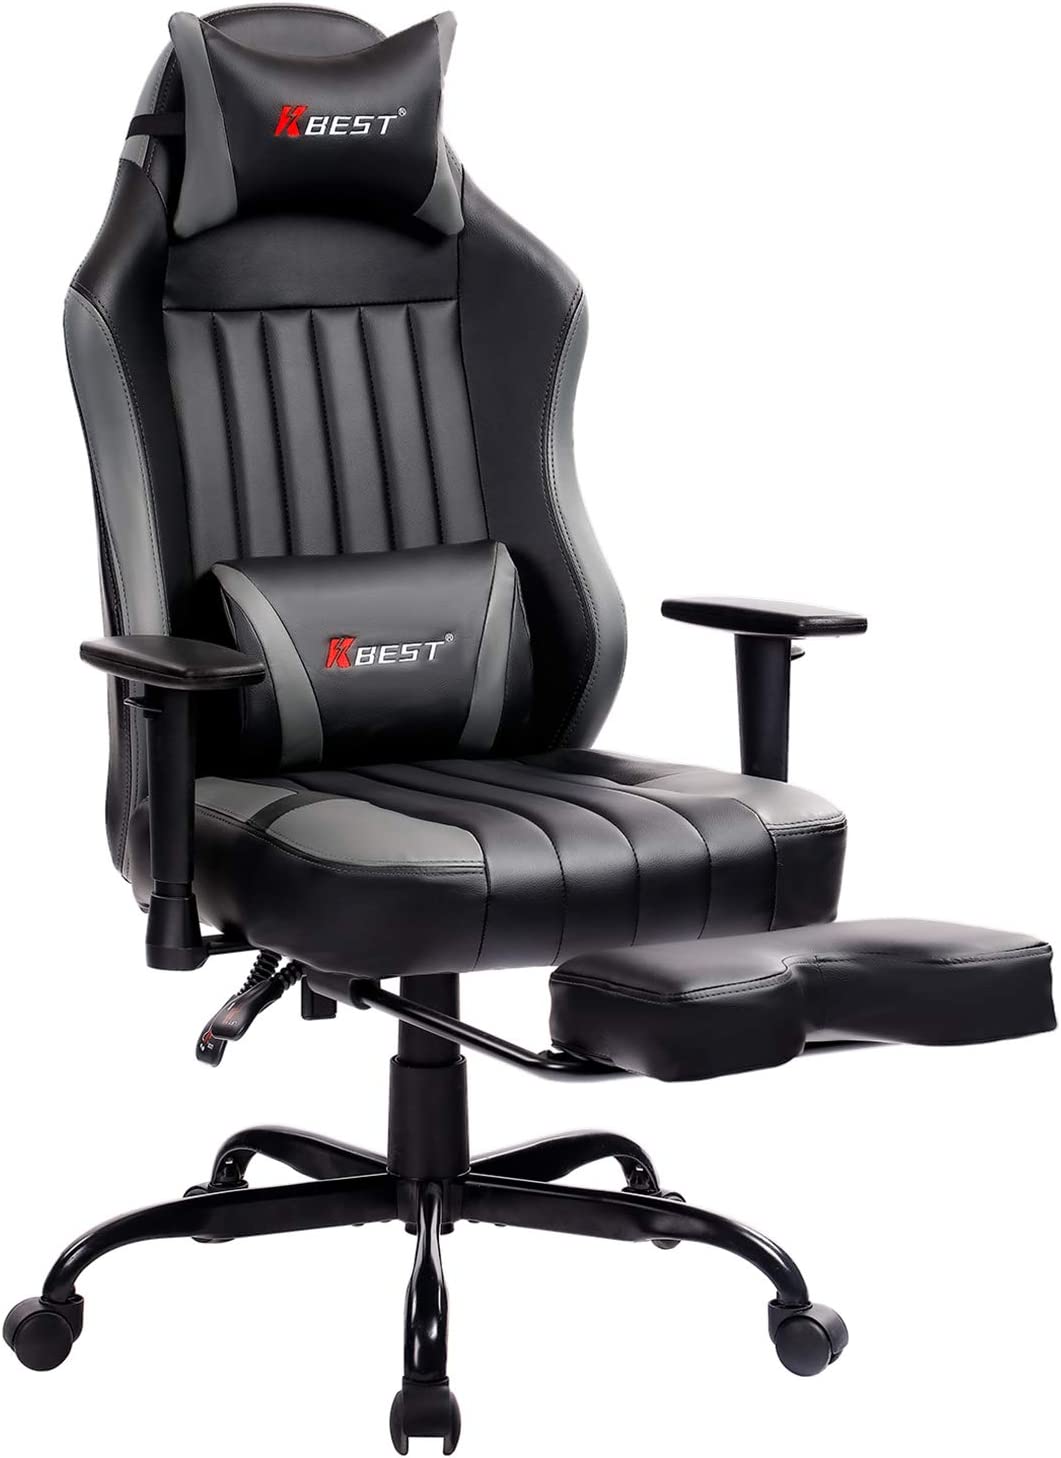 KBEST Massage Gaming Chair